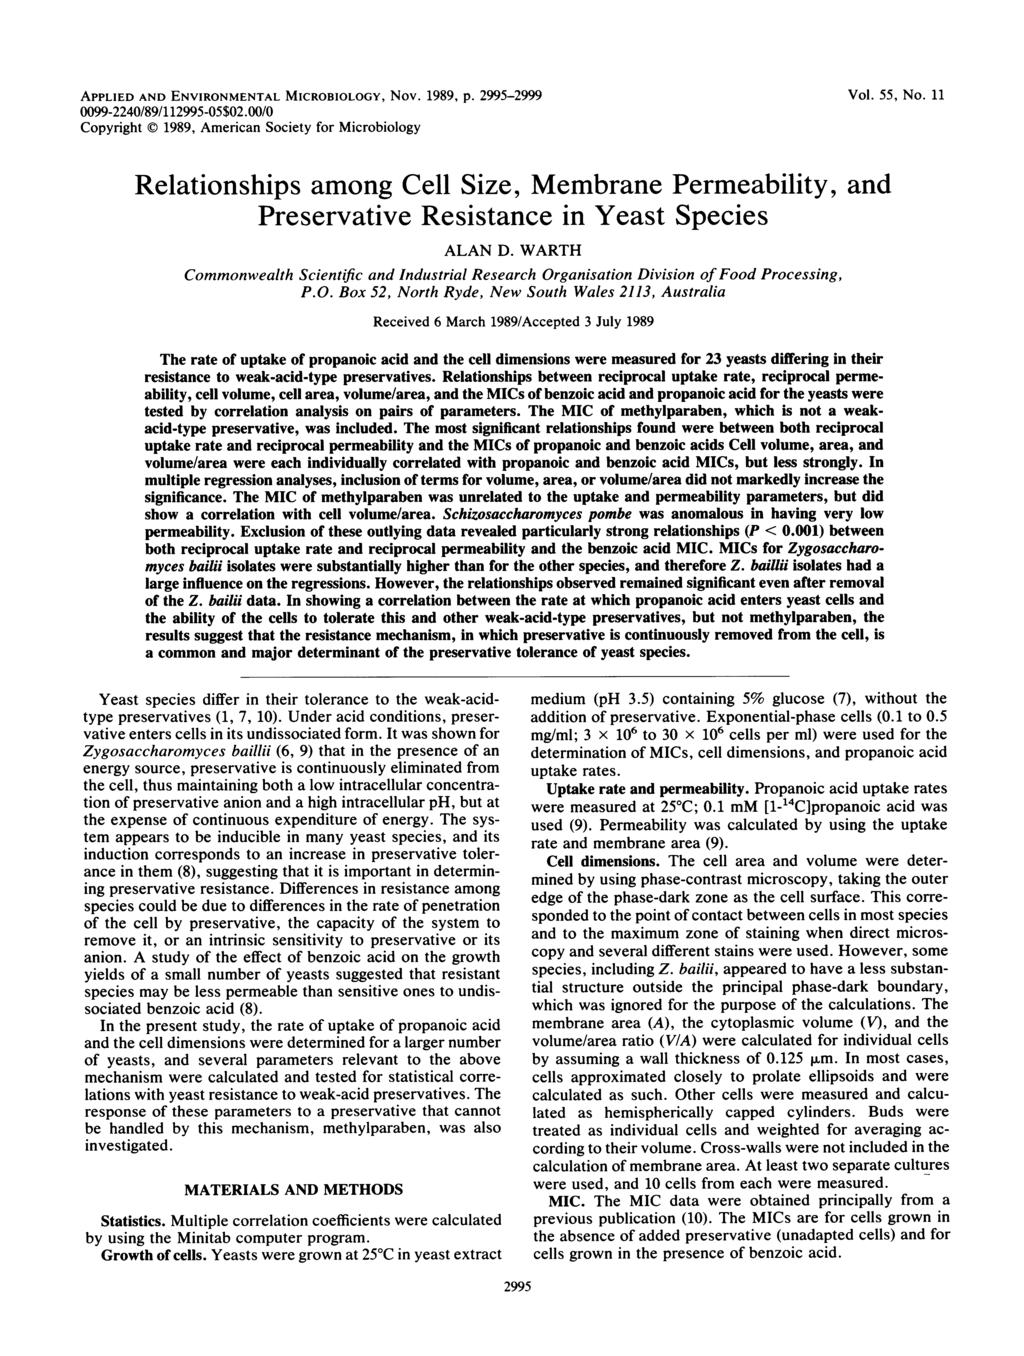 APPLIED AND ENVIRONMENTAL MICROBIOLOGY, Nov. 1989, p. 2995-2999 Vol. 55, No. 11 99-224/89/112995-5$2.